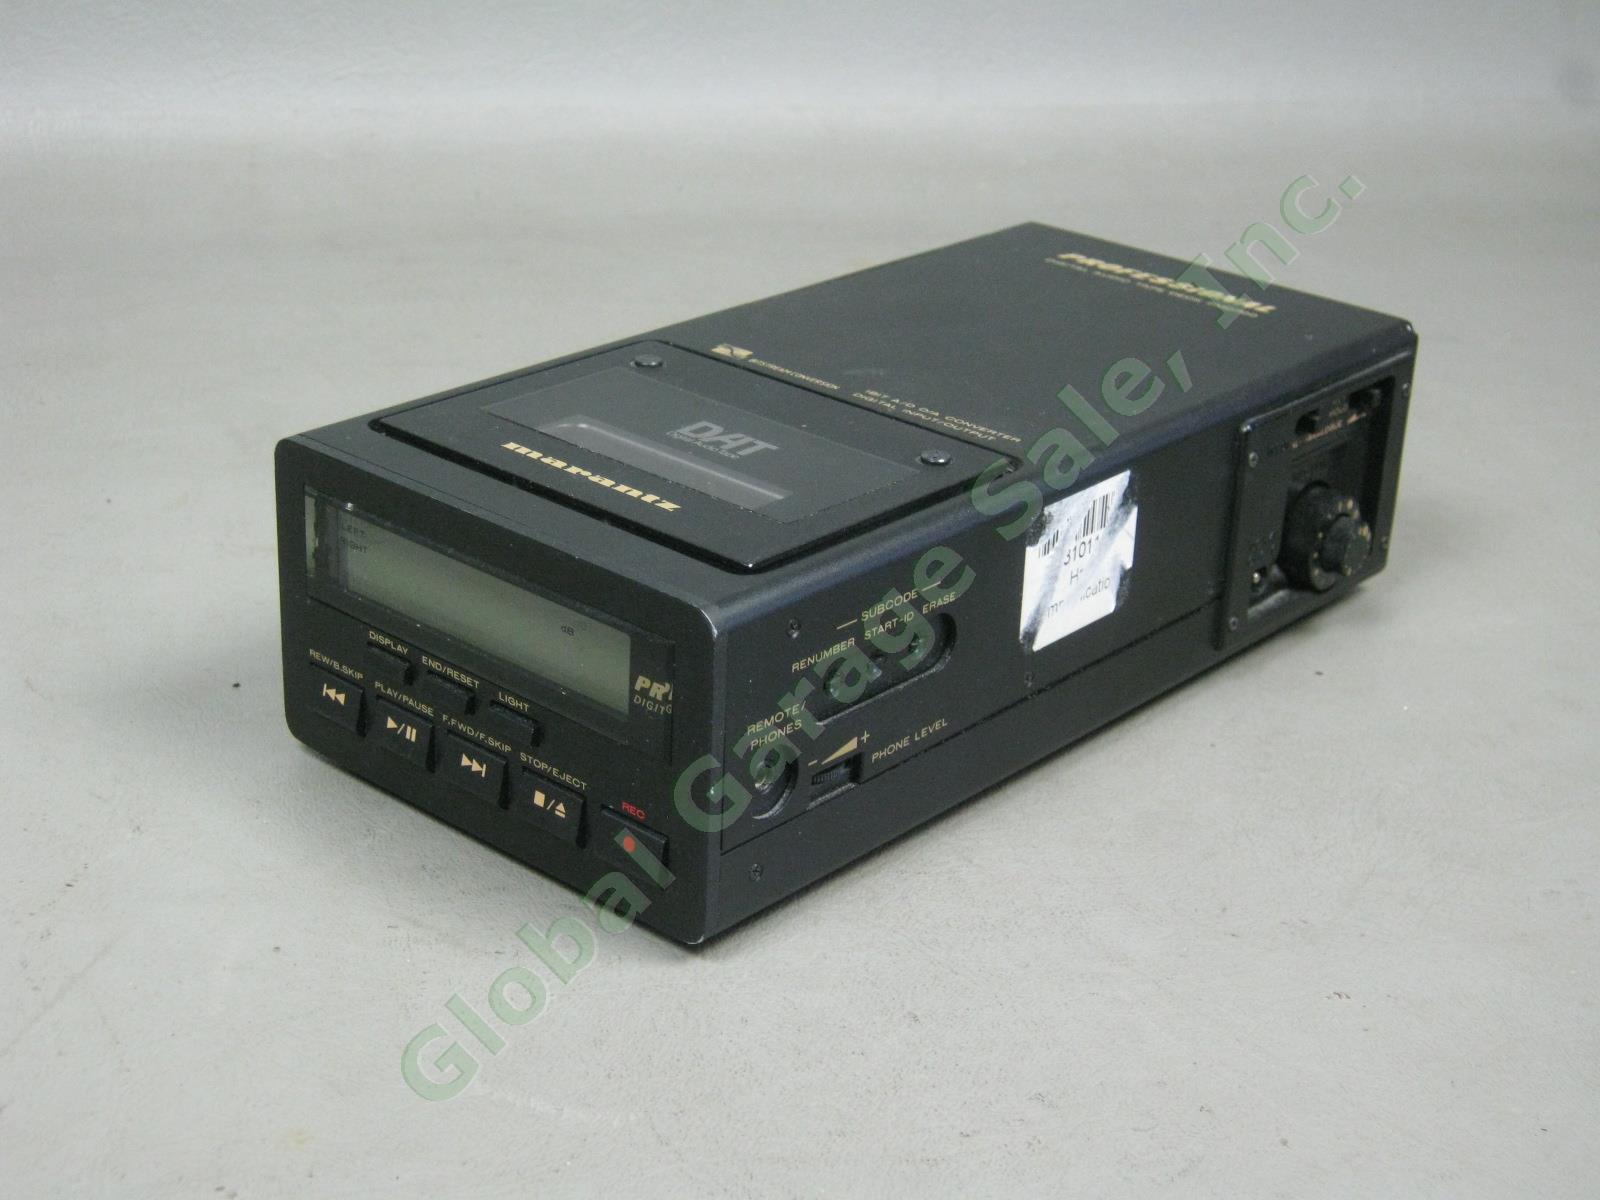 Marantz PMD700 Professional DAT Digital Audio Tape Deck Recorder +AC Adapter Lot 2